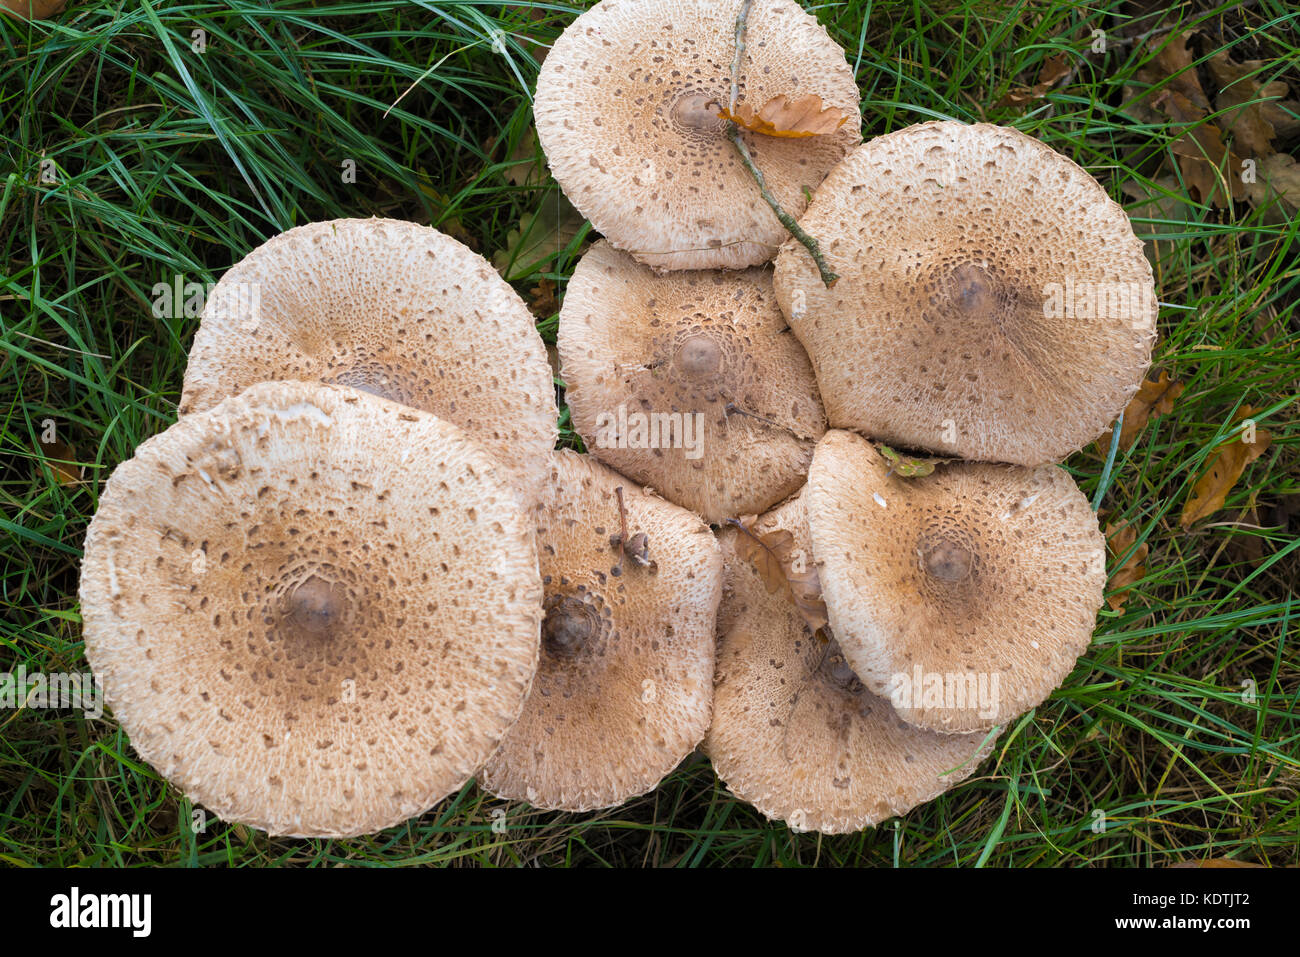 top view of some edible armlilaria mellea mushrooms Stock Photo